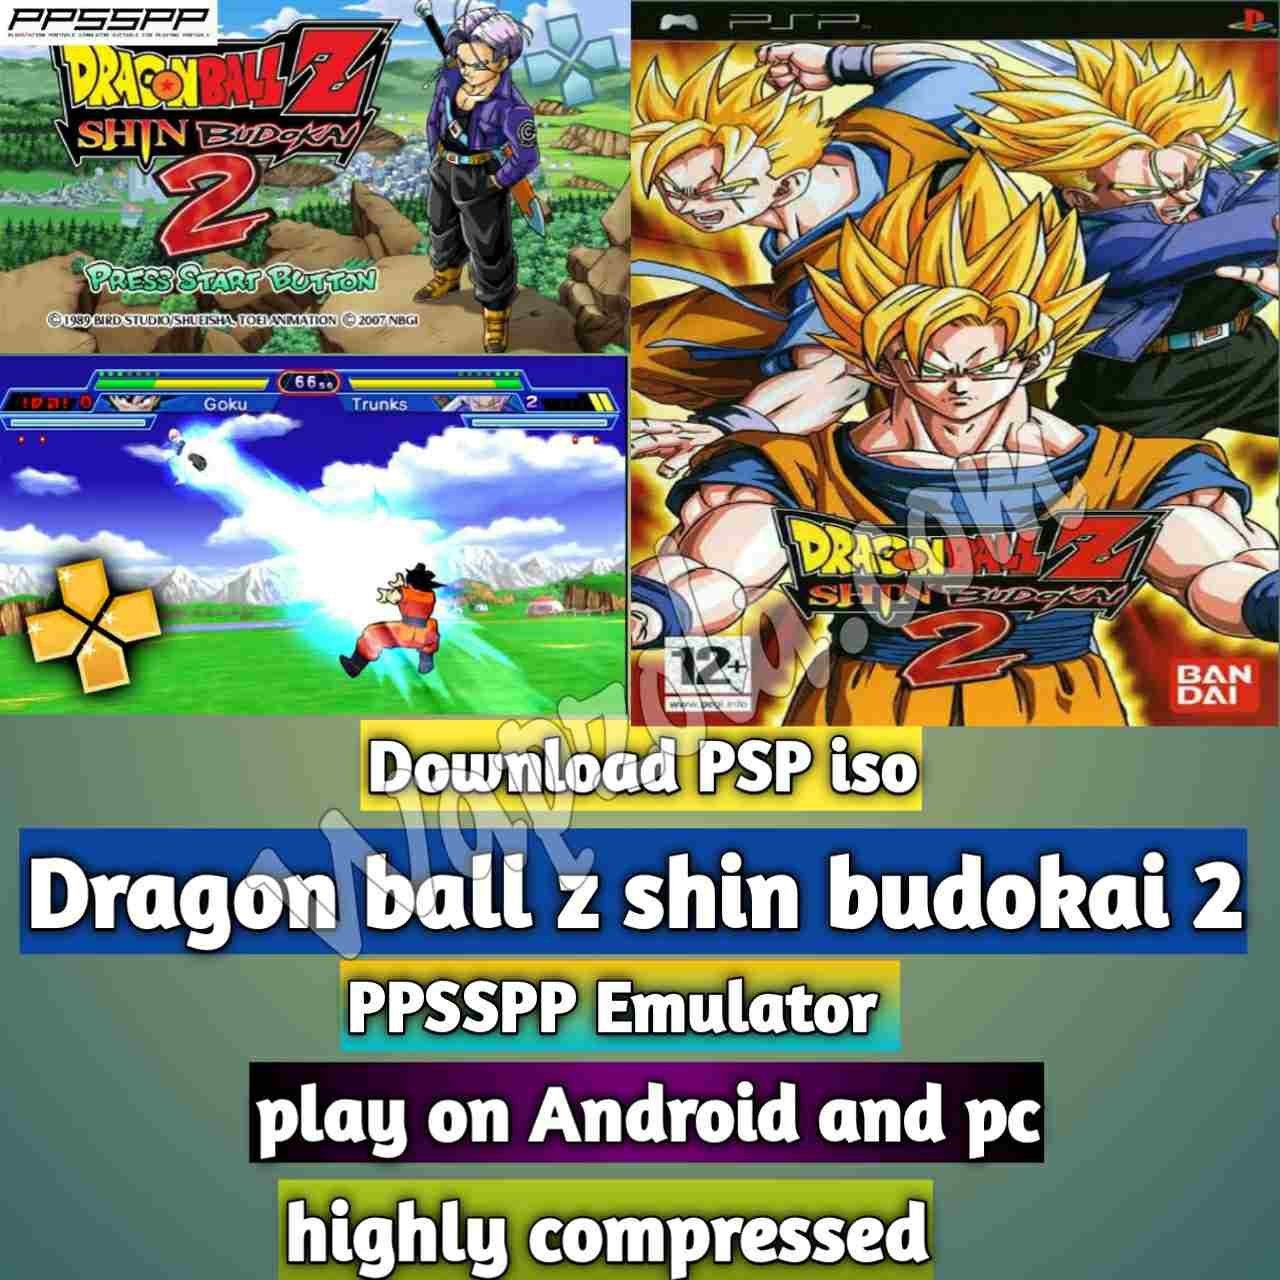 [Download] Dragon ball z shin budokai 2 iso ppsspp emulator – PSP APK Iso ROM altamente comprimido 300MB 7